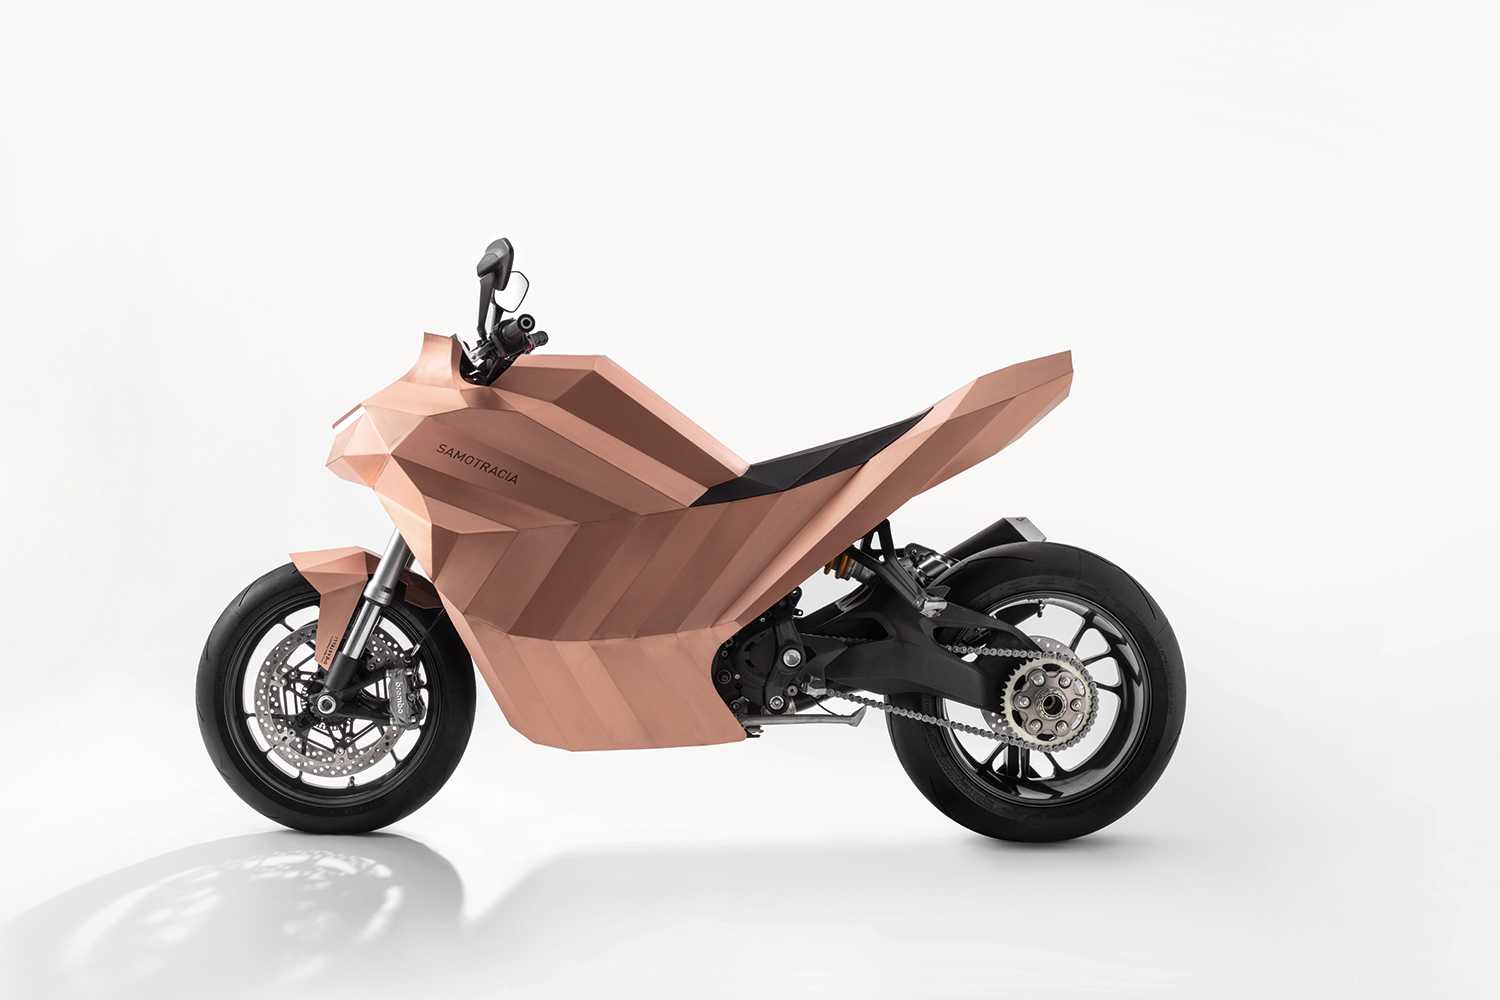 Motocicleta de cobre con estética aerodinámica